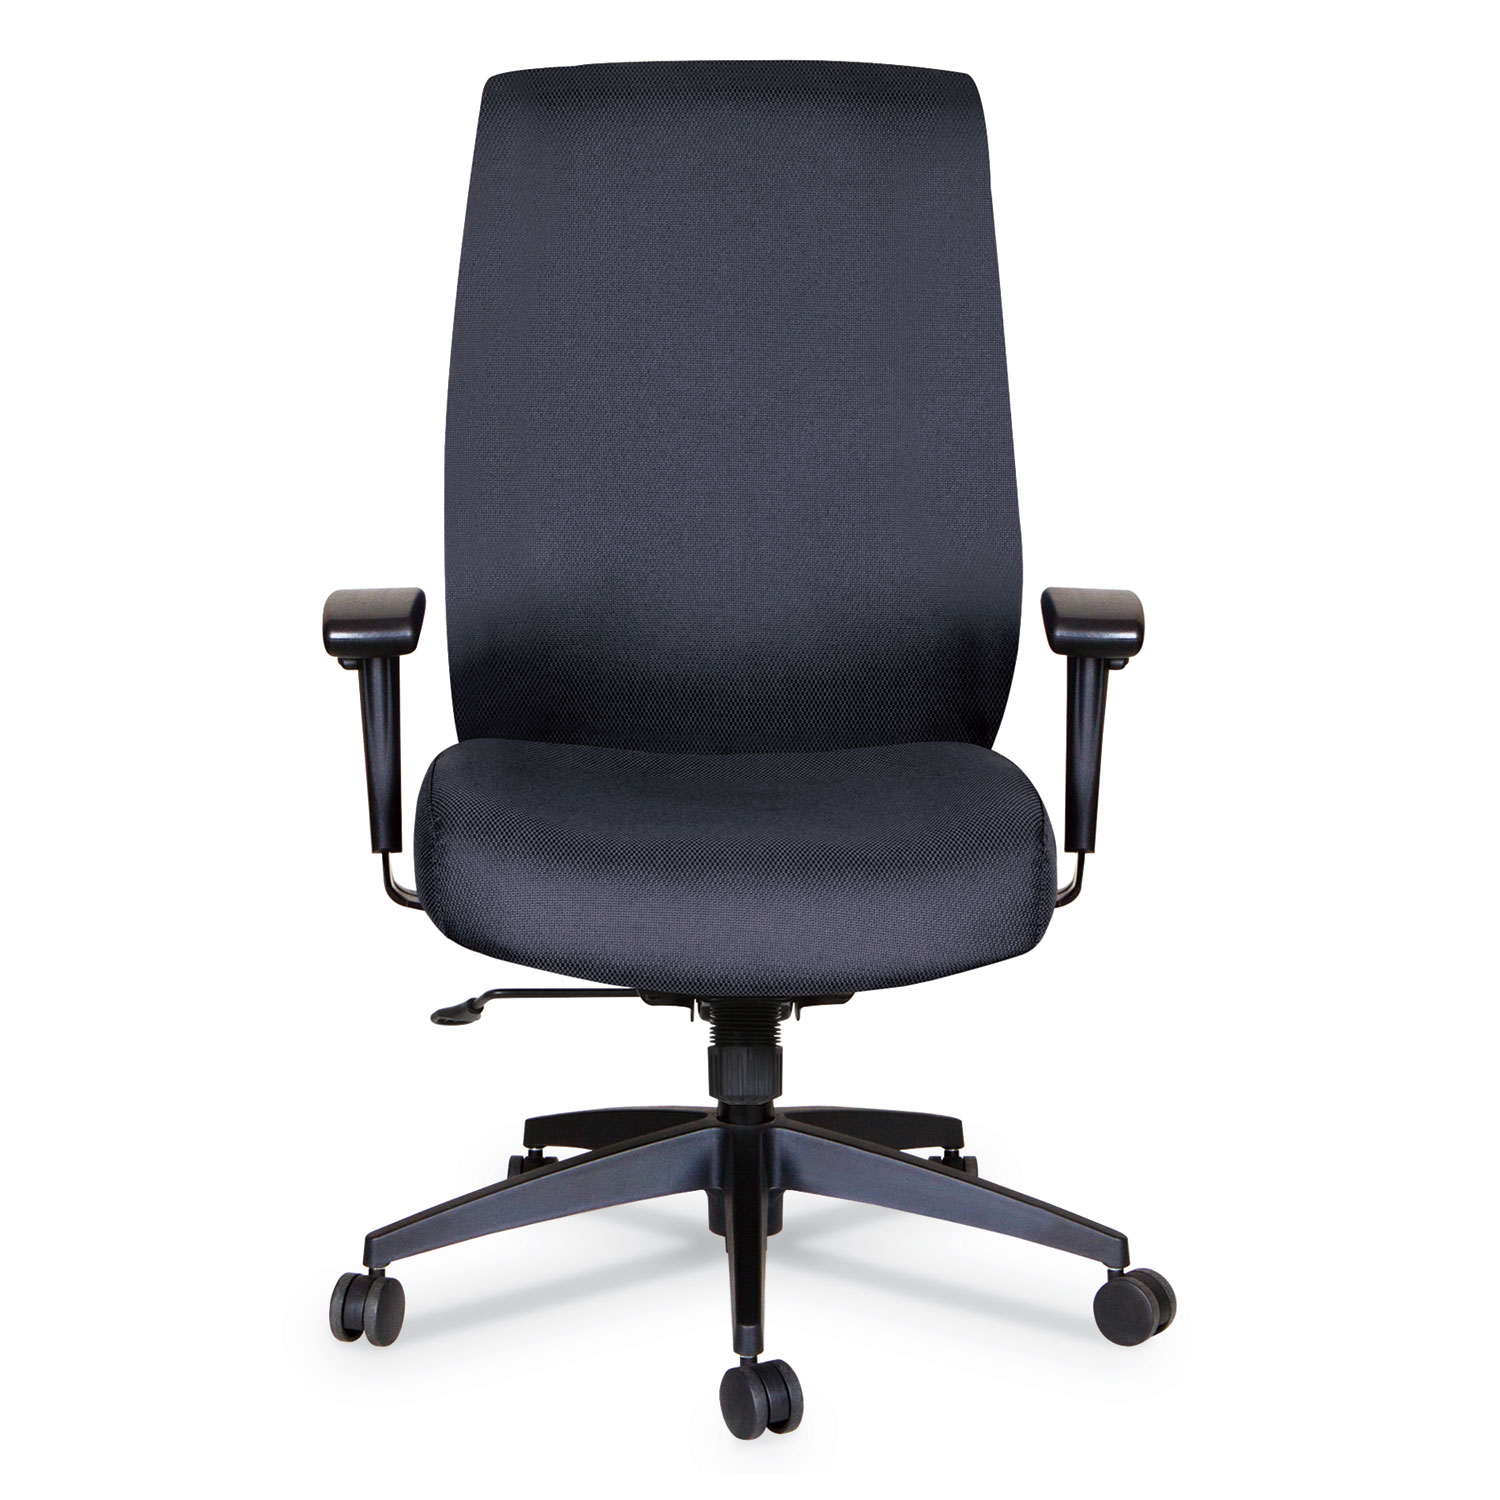 Alera Wrigley Series High Performance High-Back Synchro-Tilt Task Chair, Up to 275 lbs., Black Seat/Back, Black Base